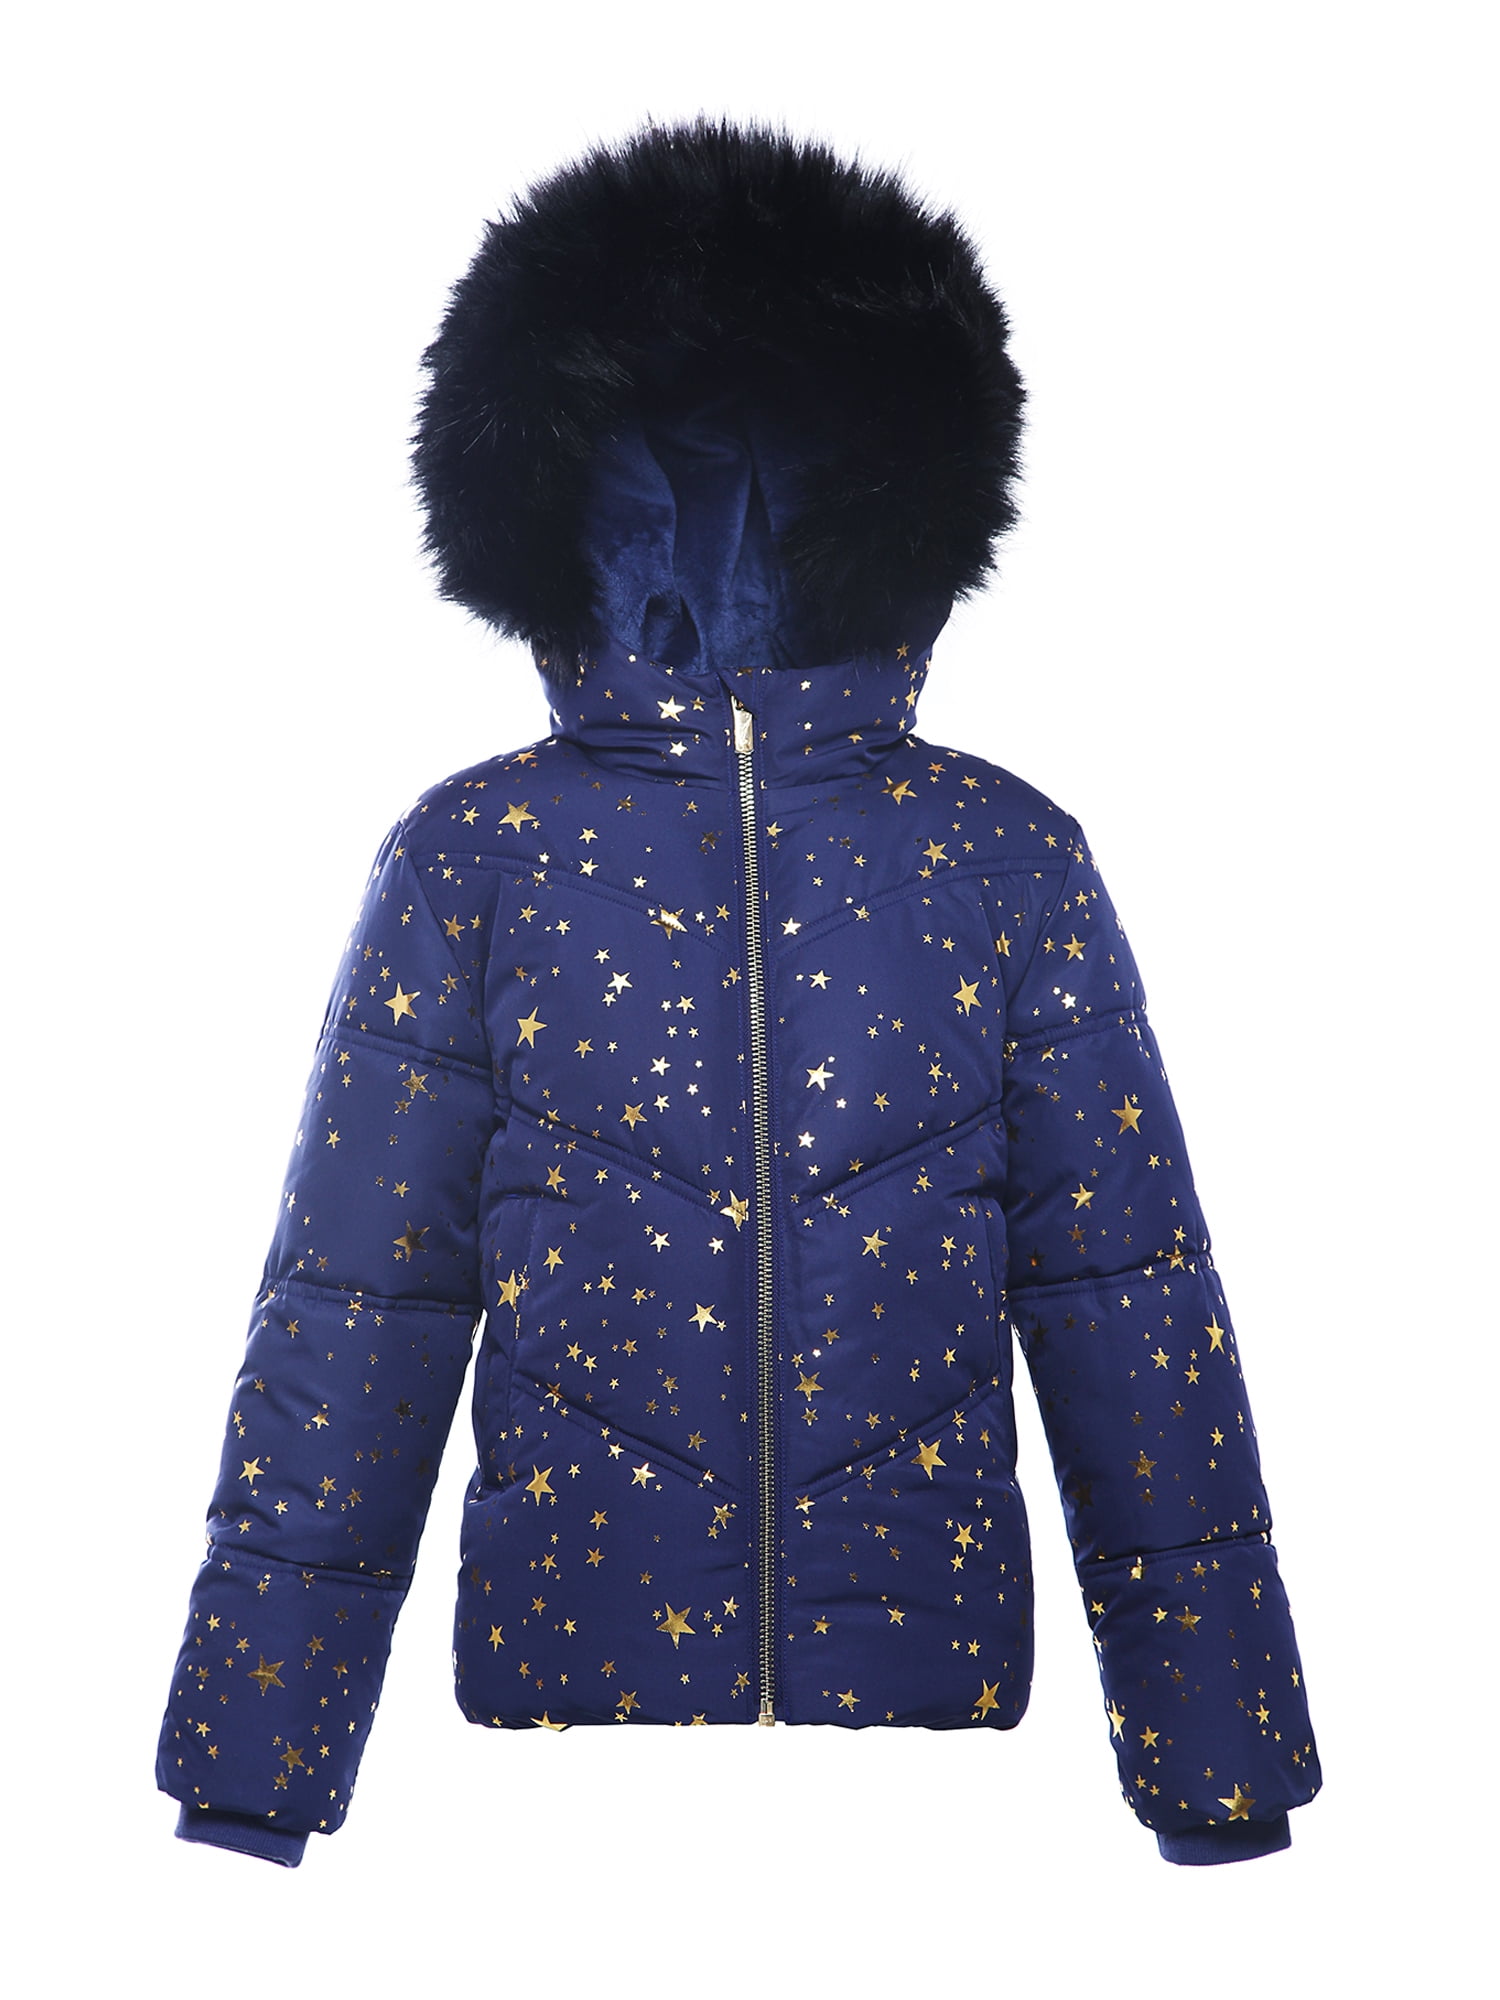 4-16 DKNY Girls’ Winter Coat Weather Resistant Quilted Bubble Puffer Windbreaker Ski Jacket 